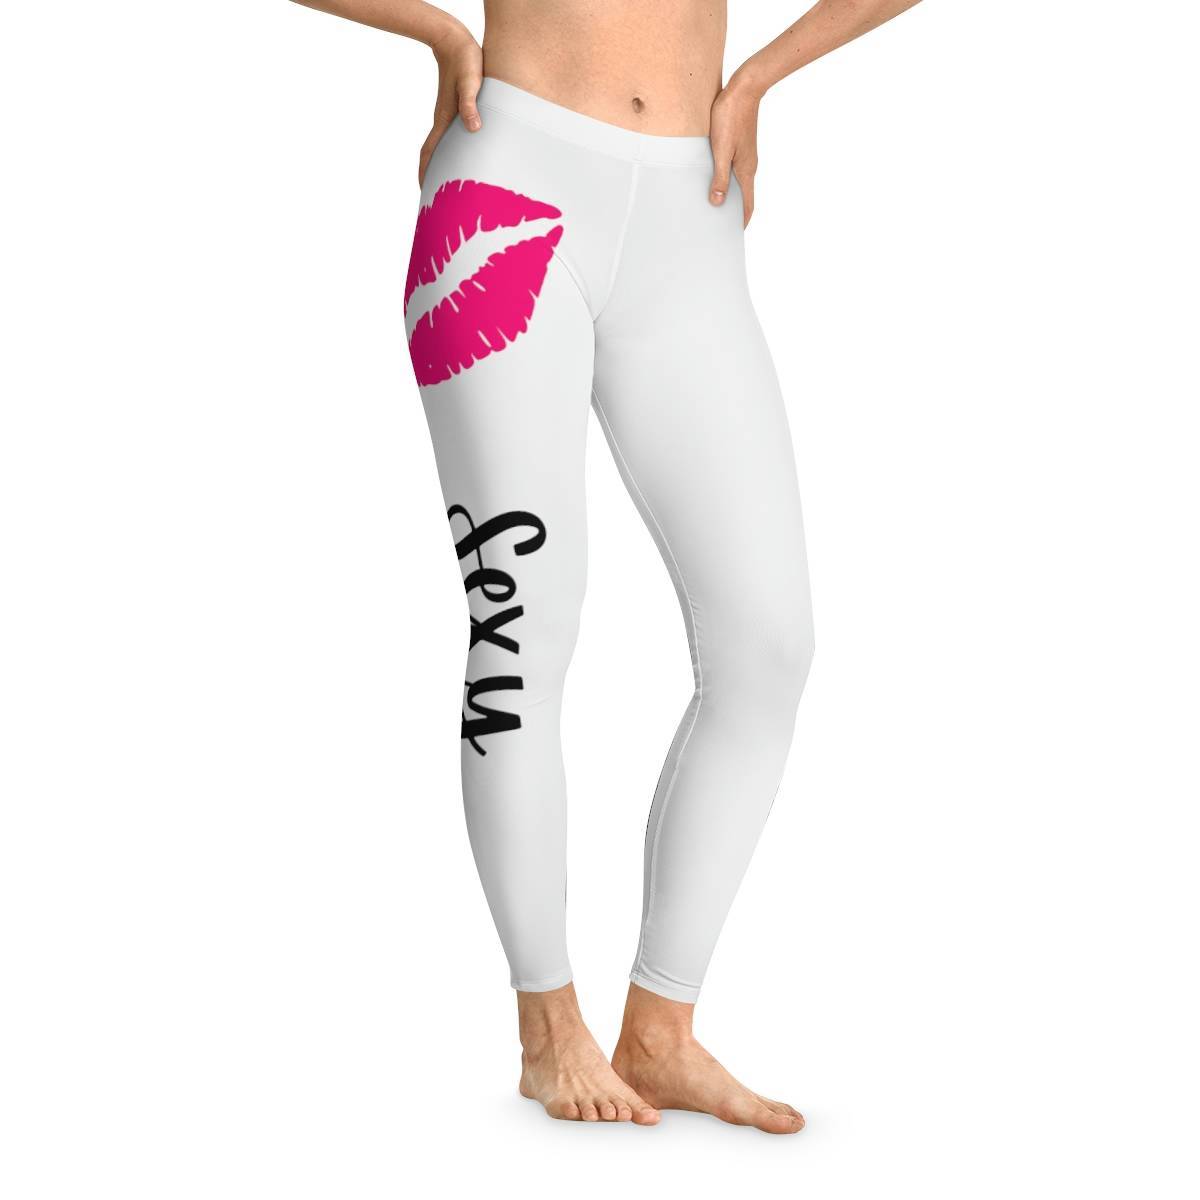 Comfortable and Stylish Victoria Secret Yoga Pants